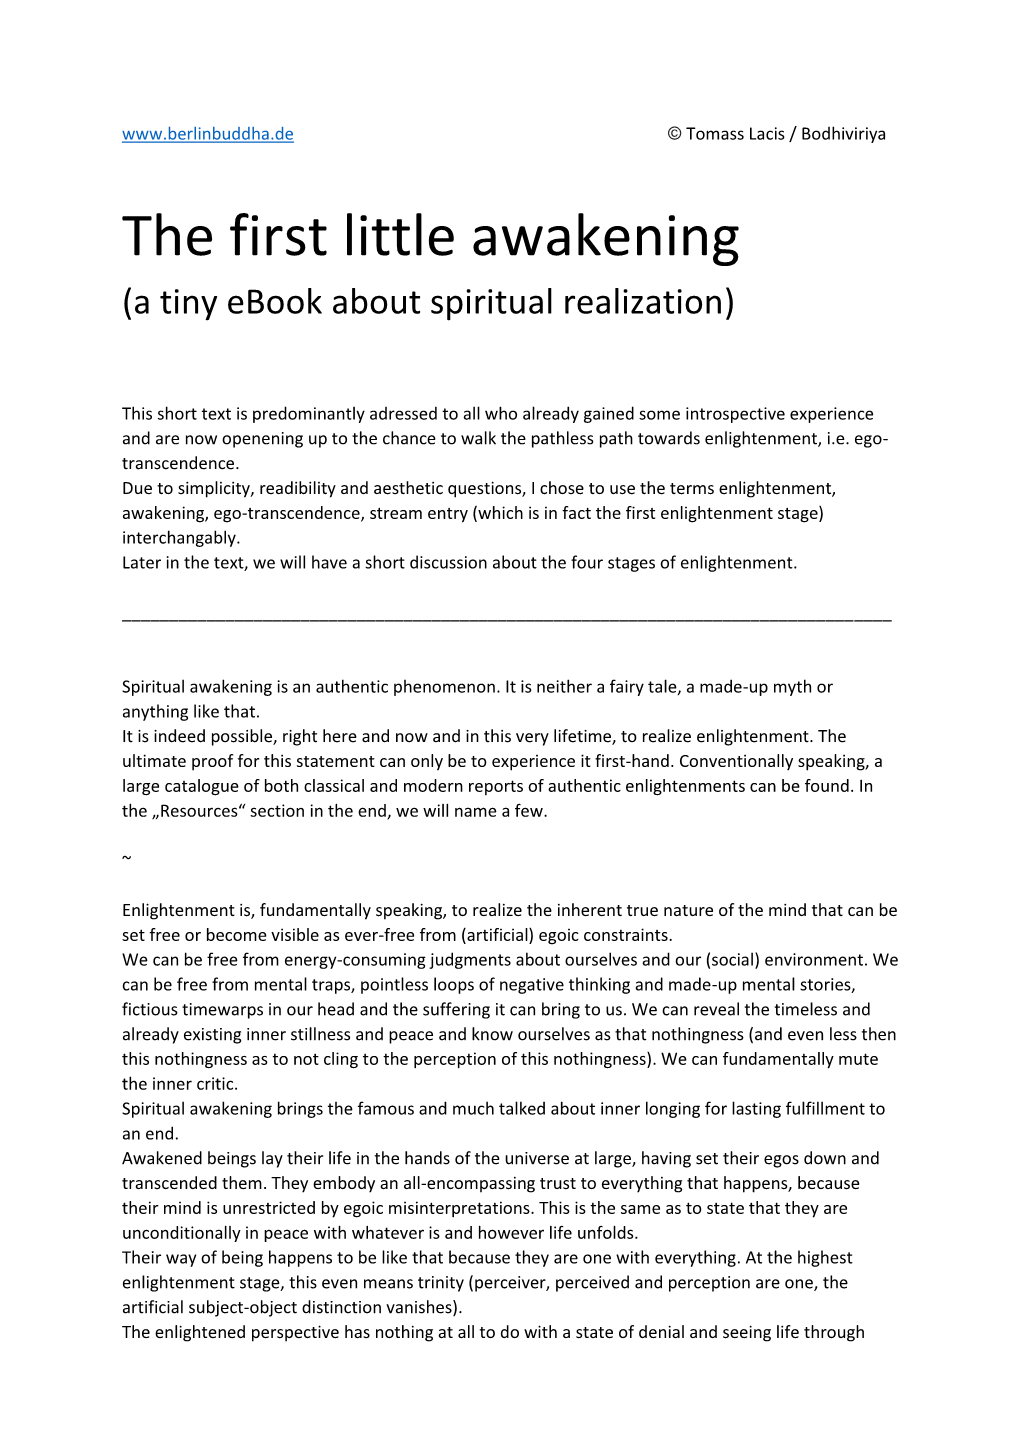 The First Little Awakening